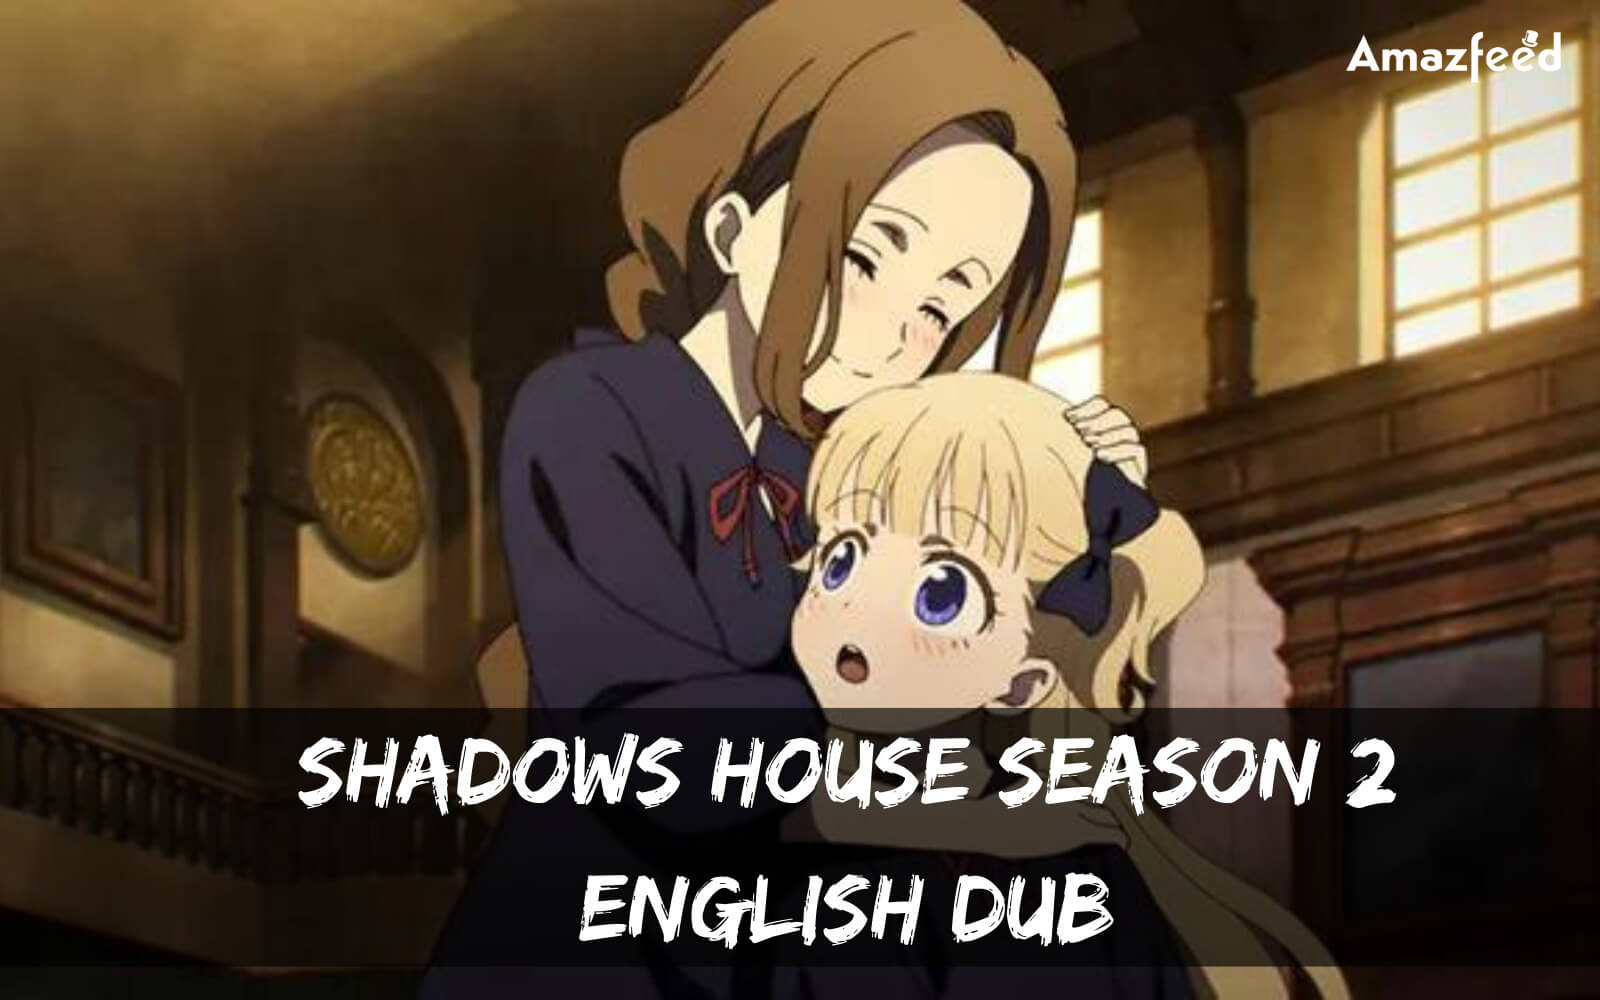 Shadows House Season 2 English Dub release date